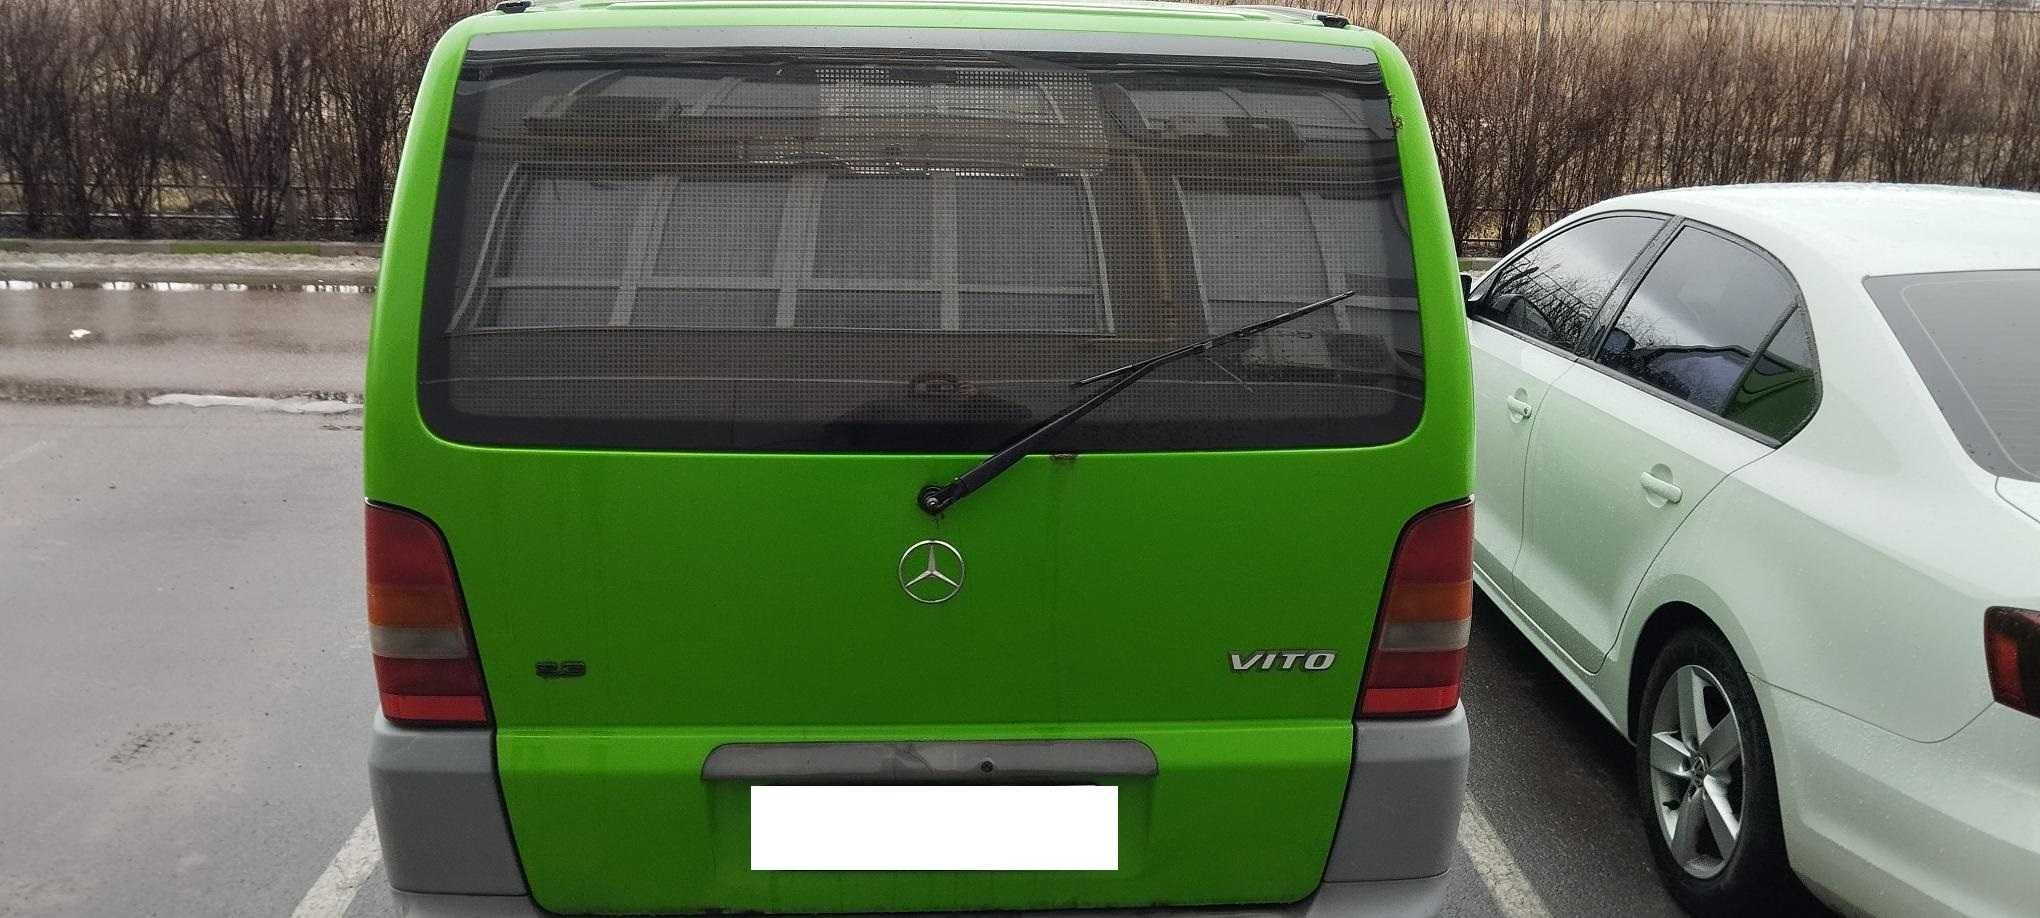 Mercedes-Benz Vito 108